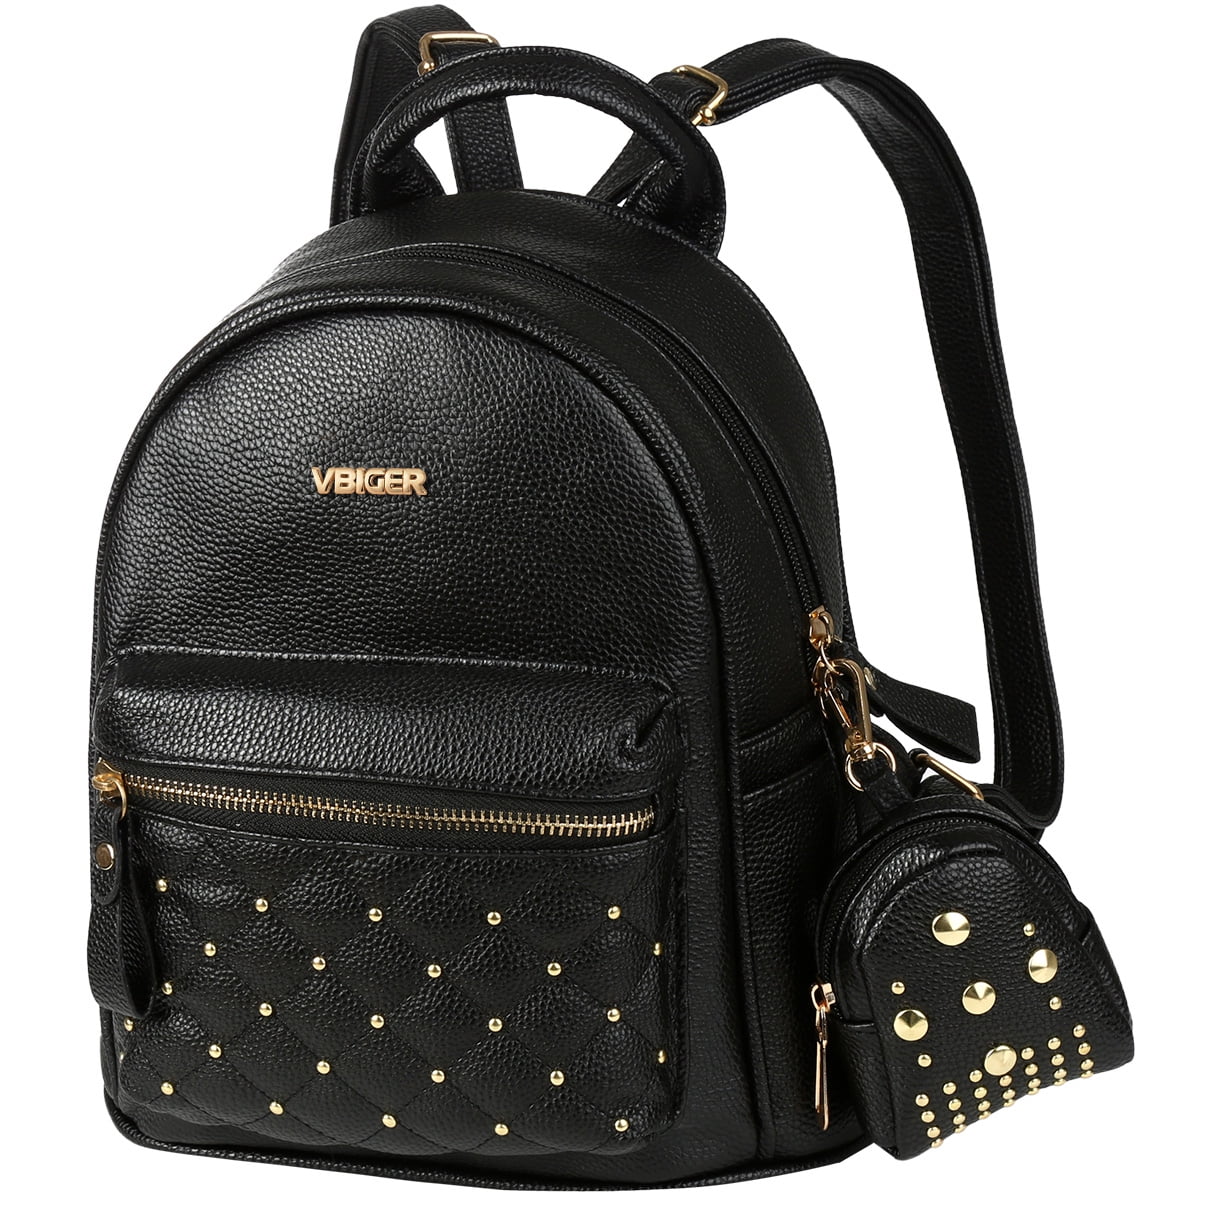 Women's Backpack Leather Shoulder Bag Girls Travel School Bag Handbag Rucksacks 